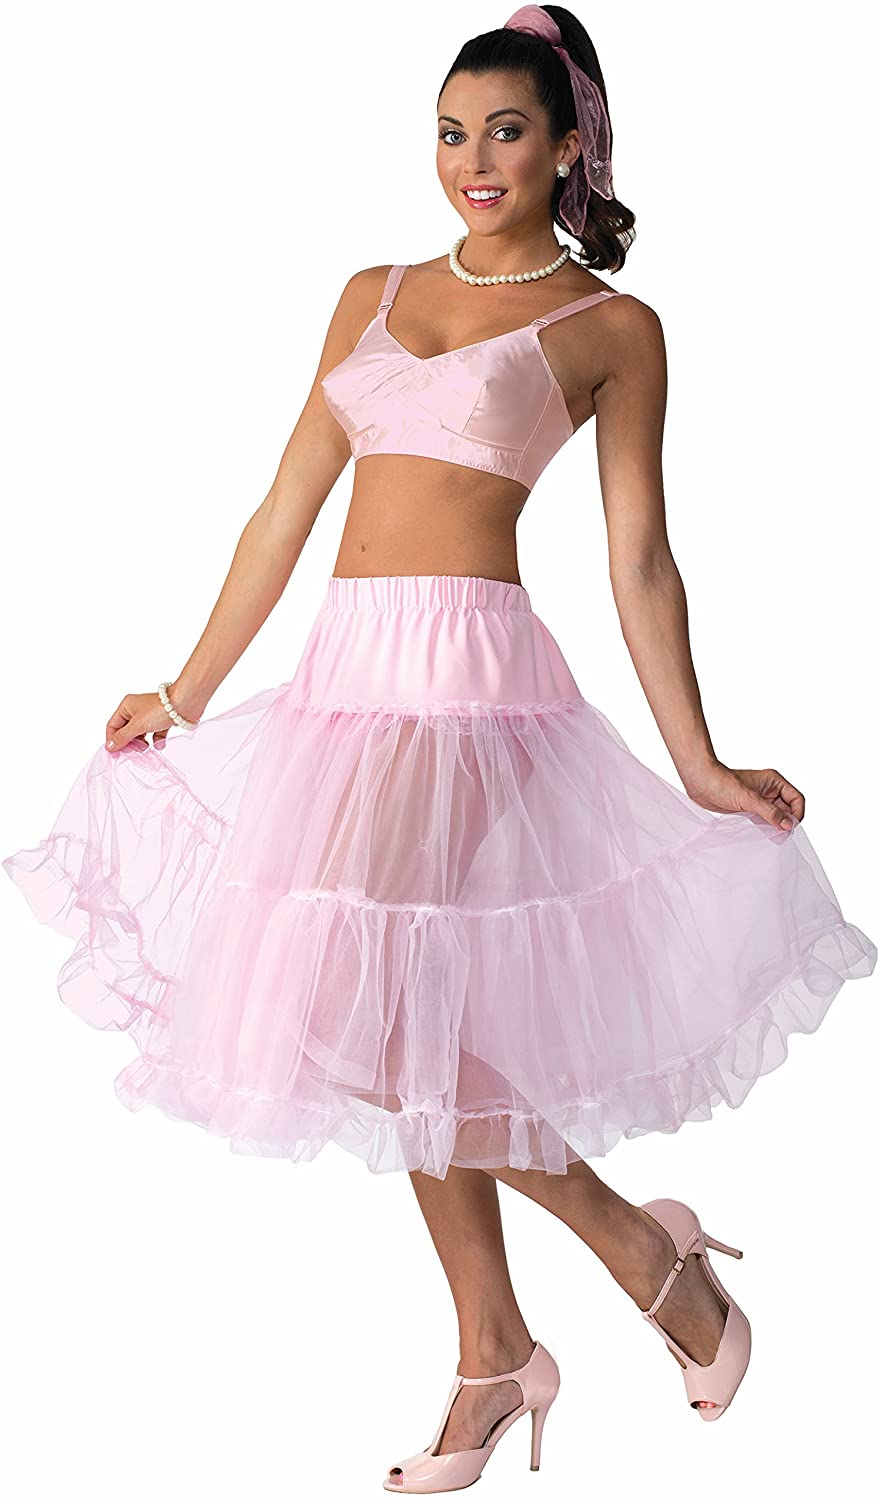 Flirting with The 50's Rockabilly Women's Pink Crinoline Petticoat